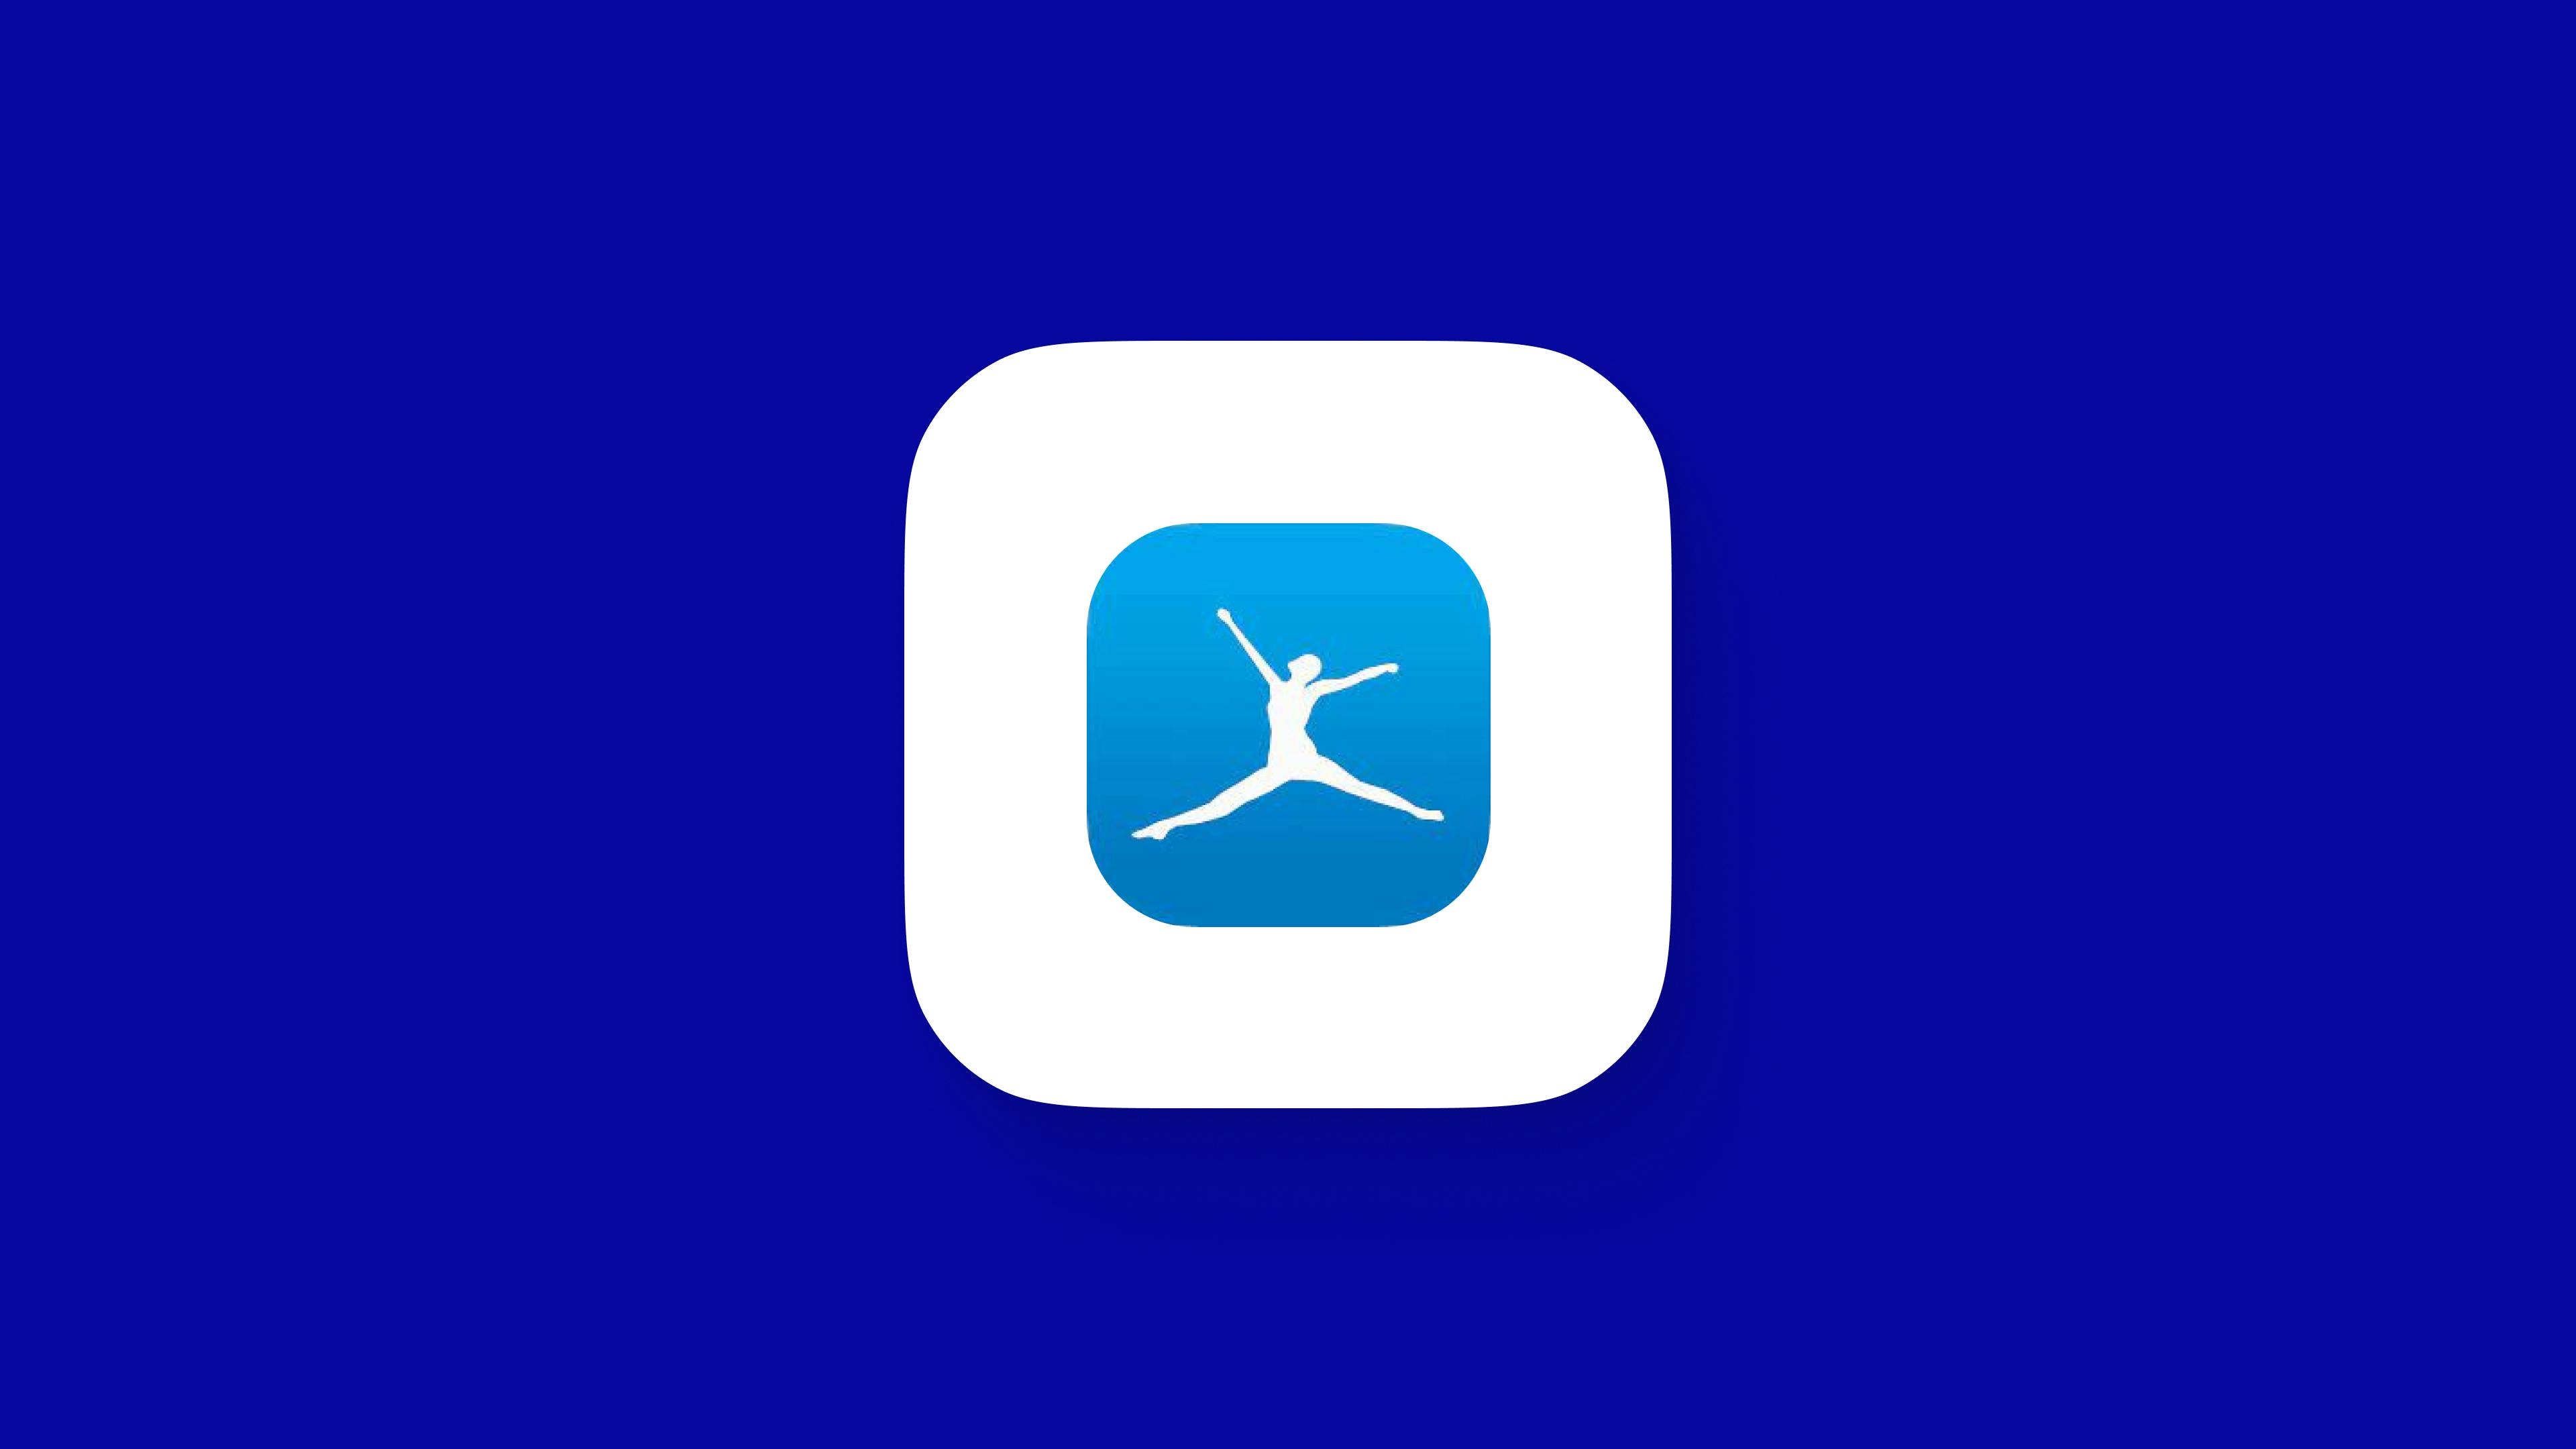 MyFitnessPal - Apps for self-improvement - Headway App